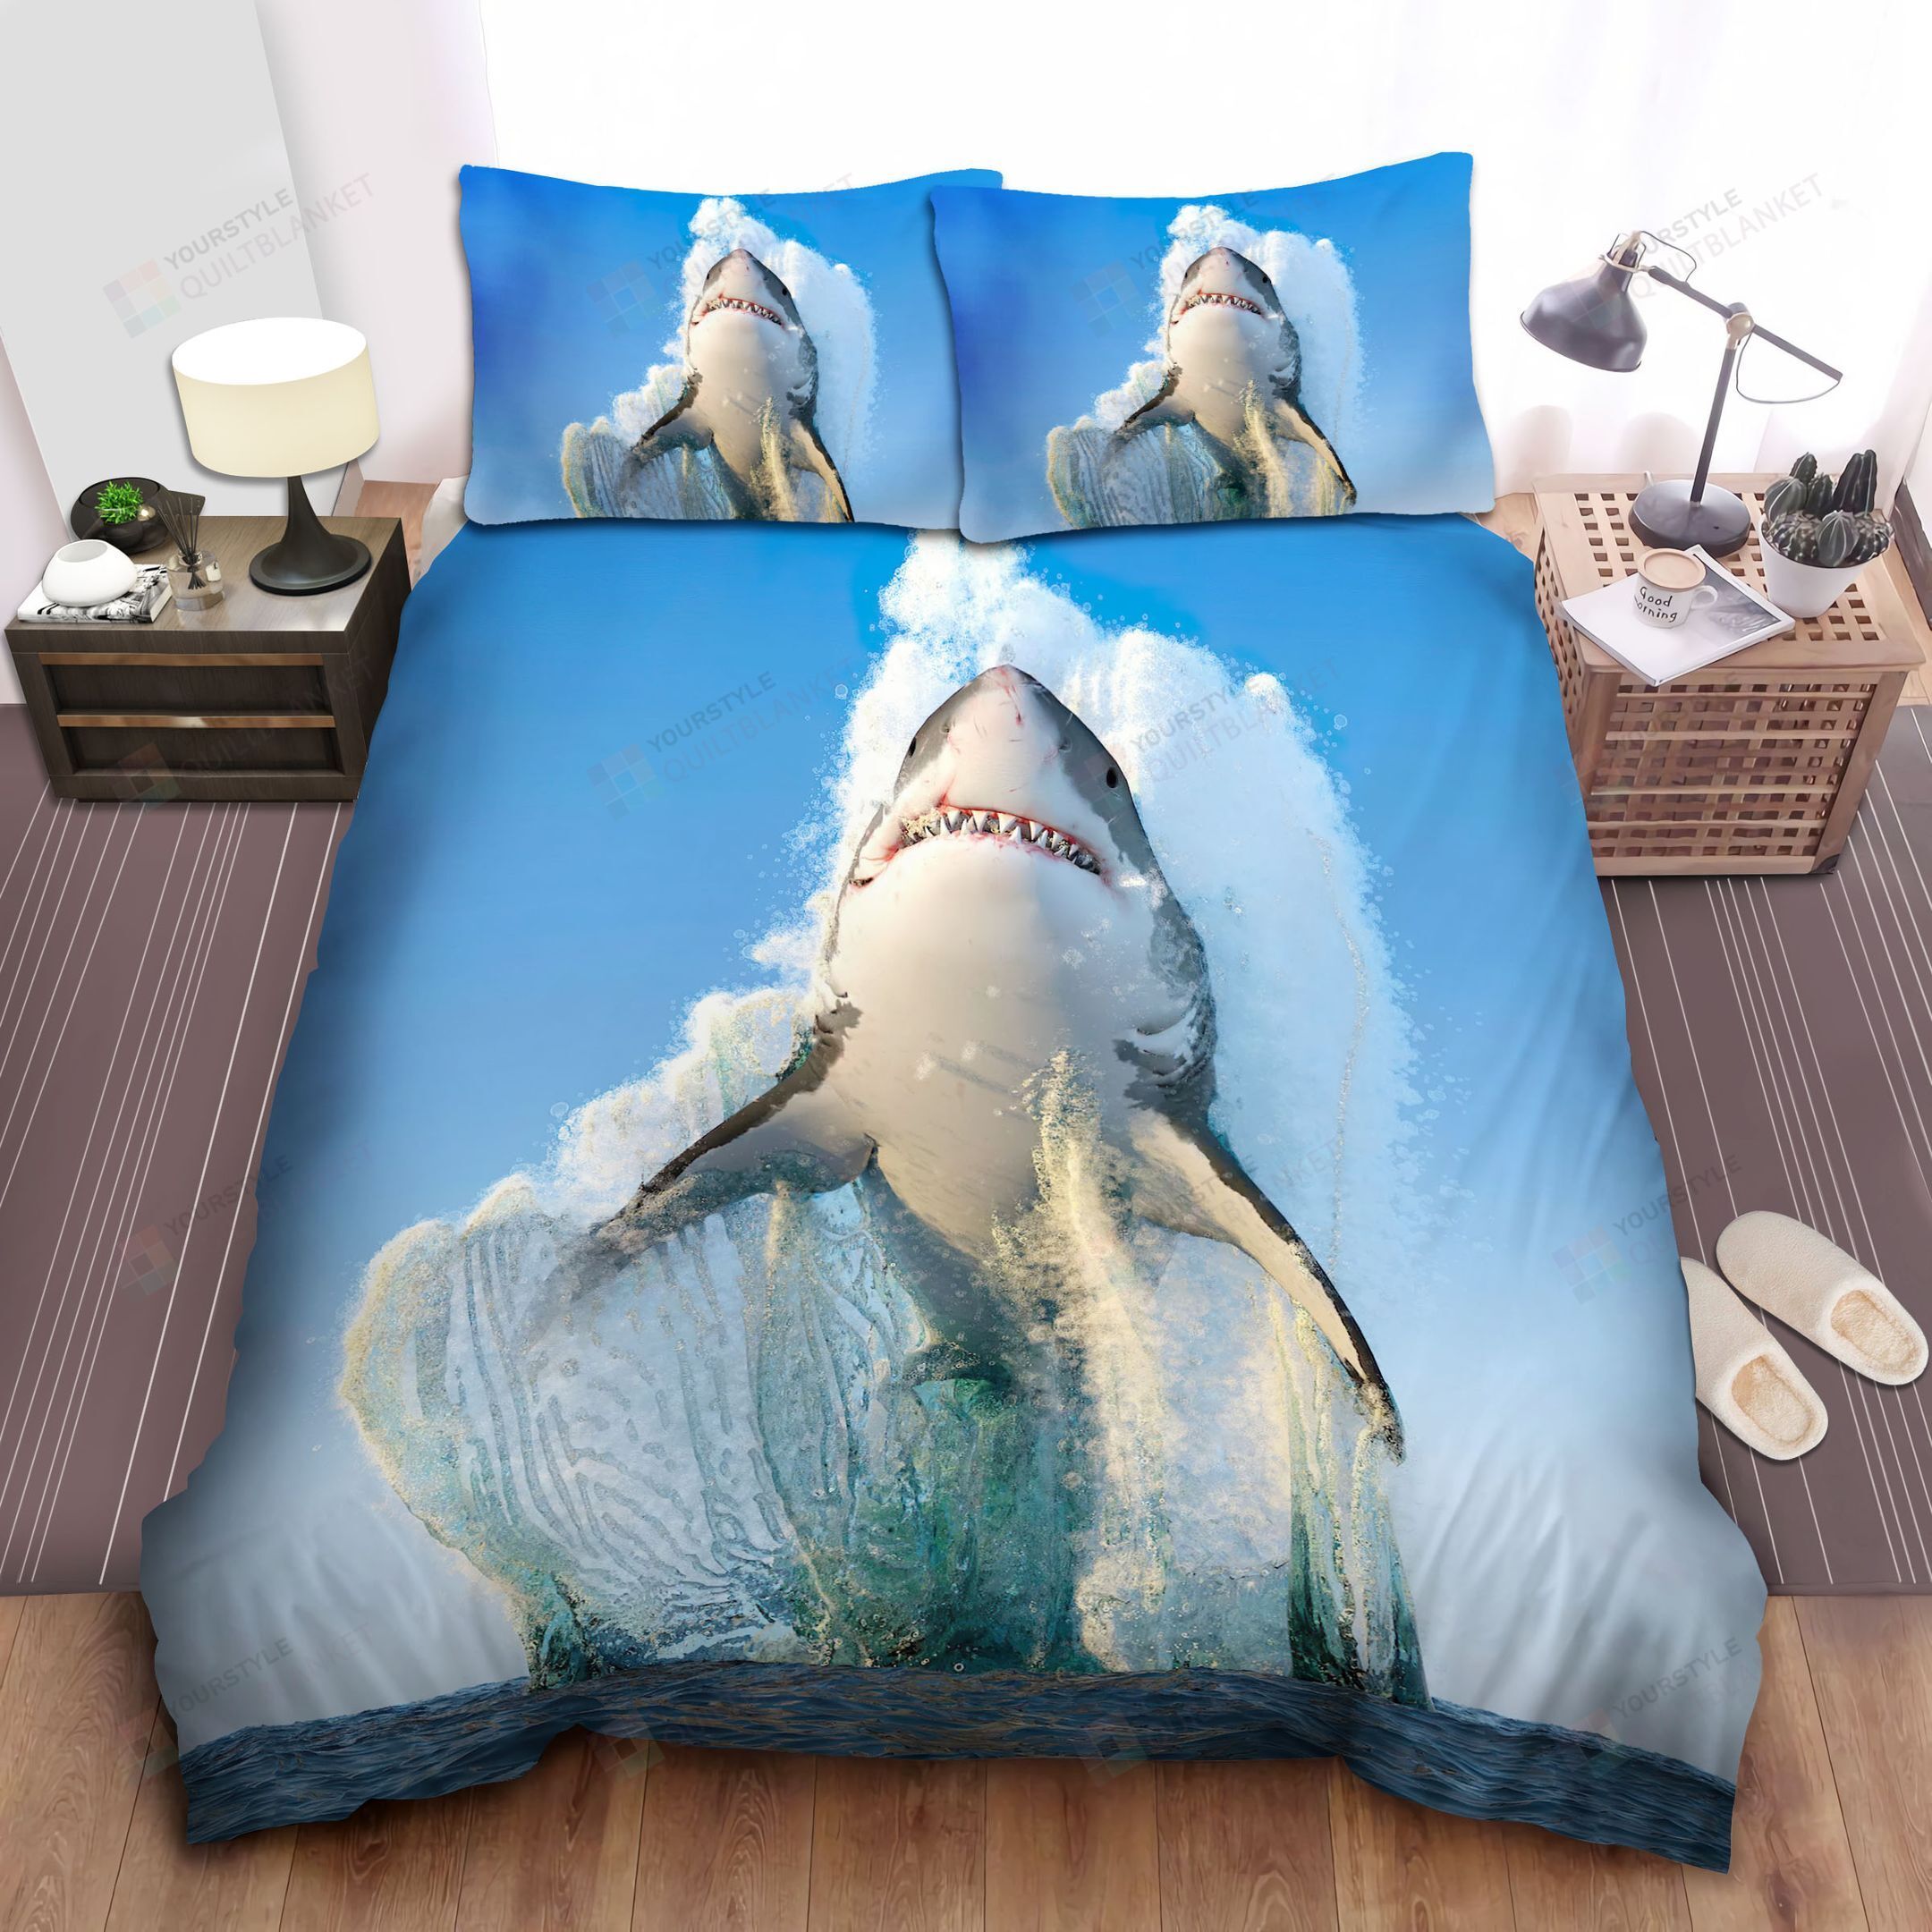 Jumping Shark Bed Sheets Spread Comforter Duvet Cover Bedding Sets